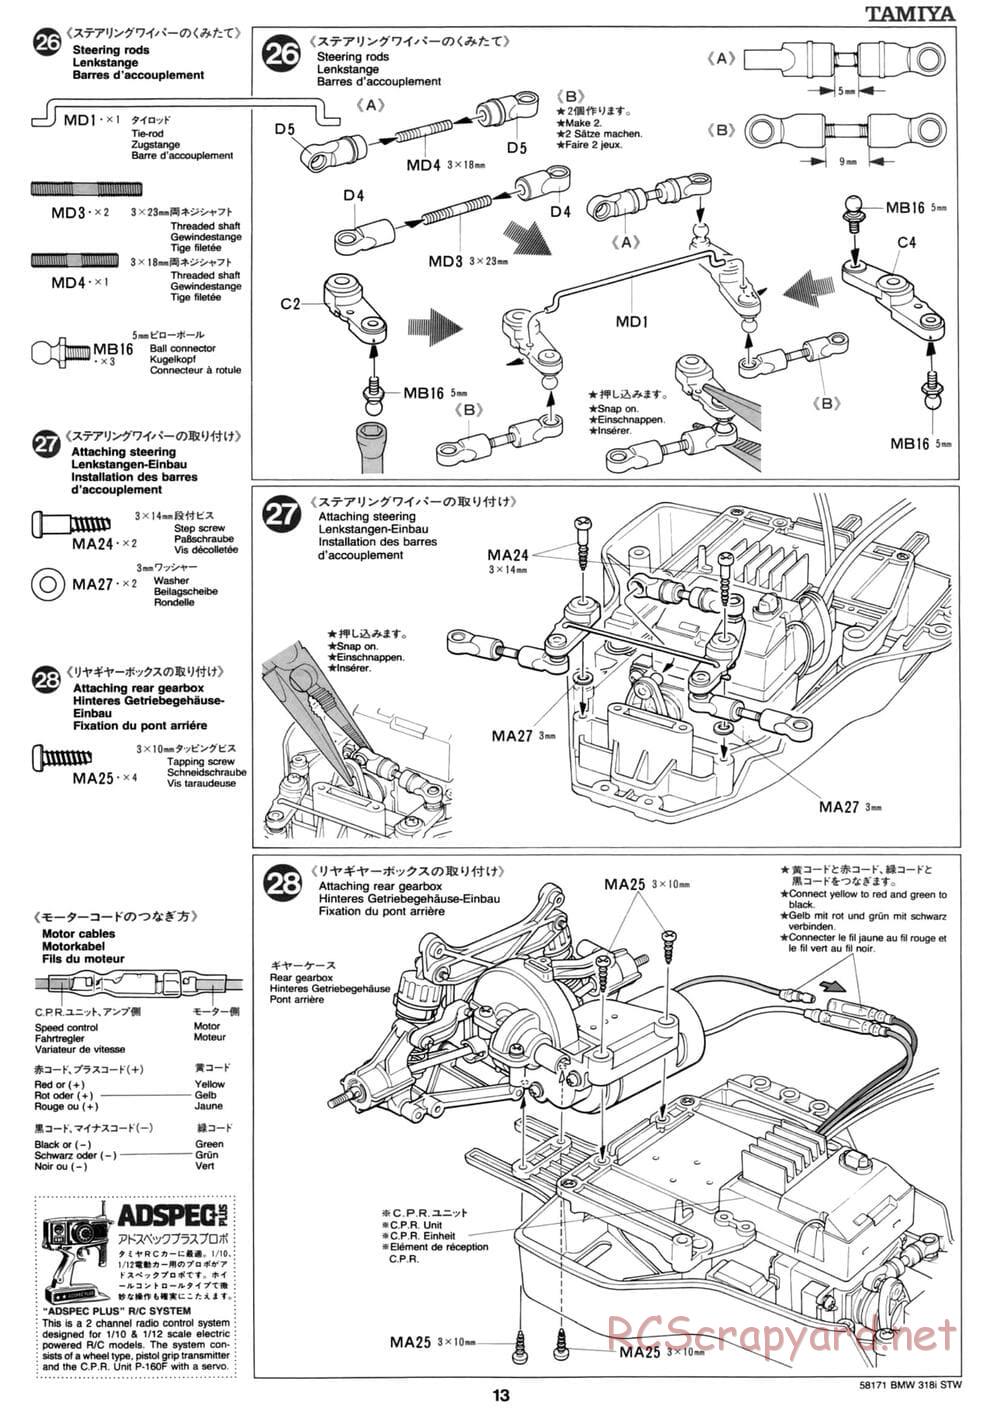 Tamiya - BMW 318i STW - TA-02 Chassis - Manual - Page 13